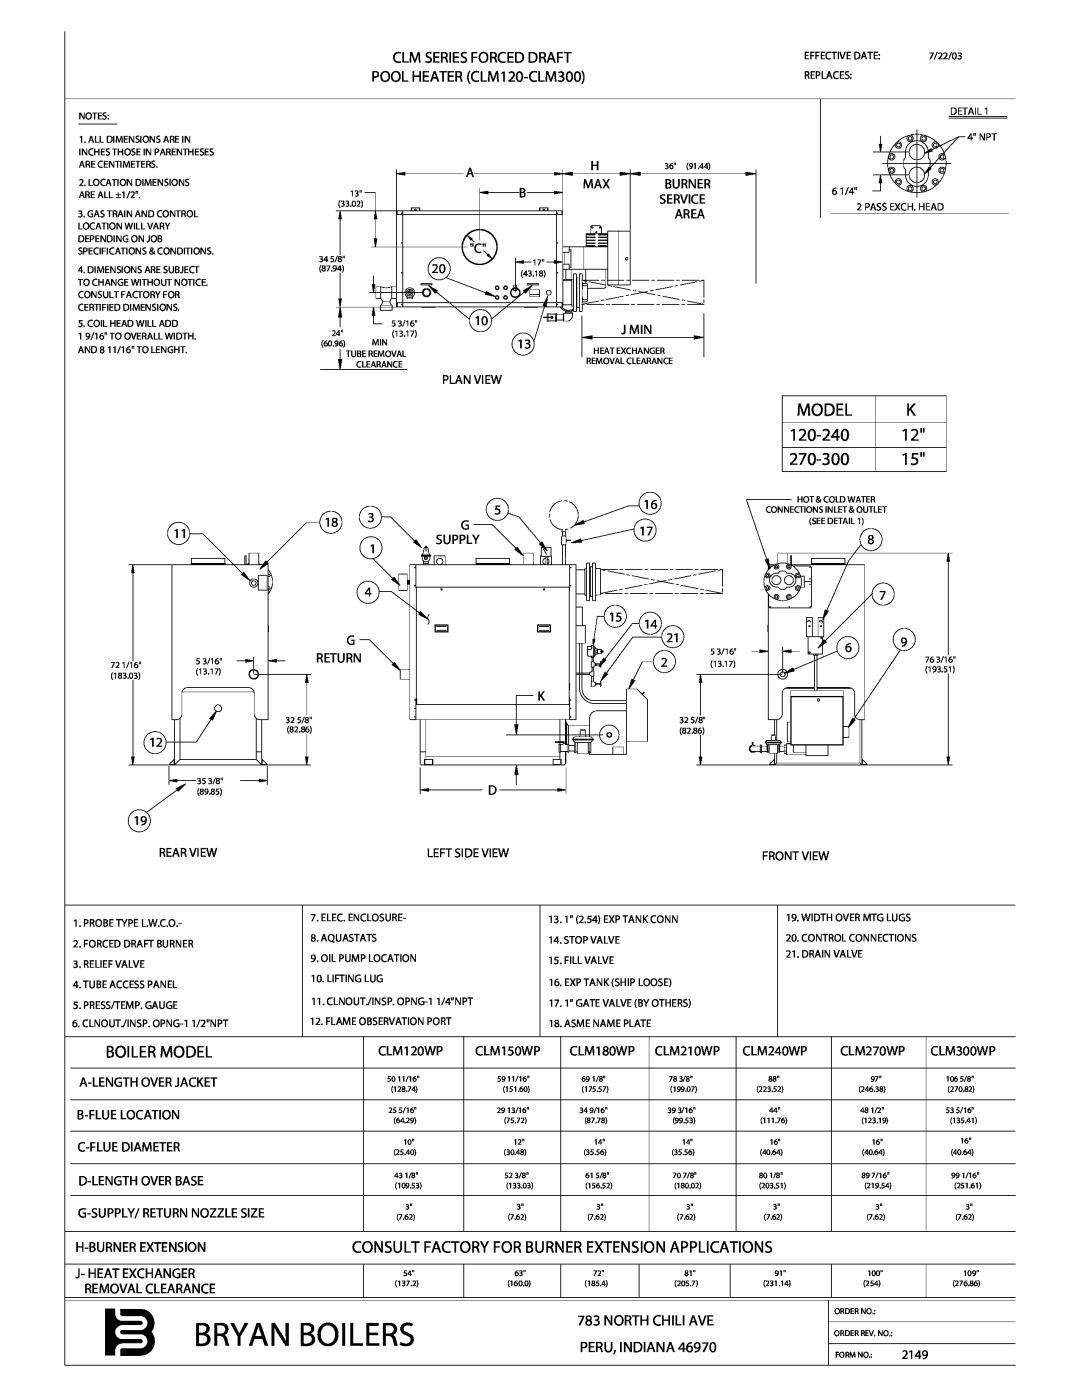 Bryan Boilers CLM300 specifications Bryan Boilers, 120-240, 270-300, Boiler Model, H-Burner Extension 